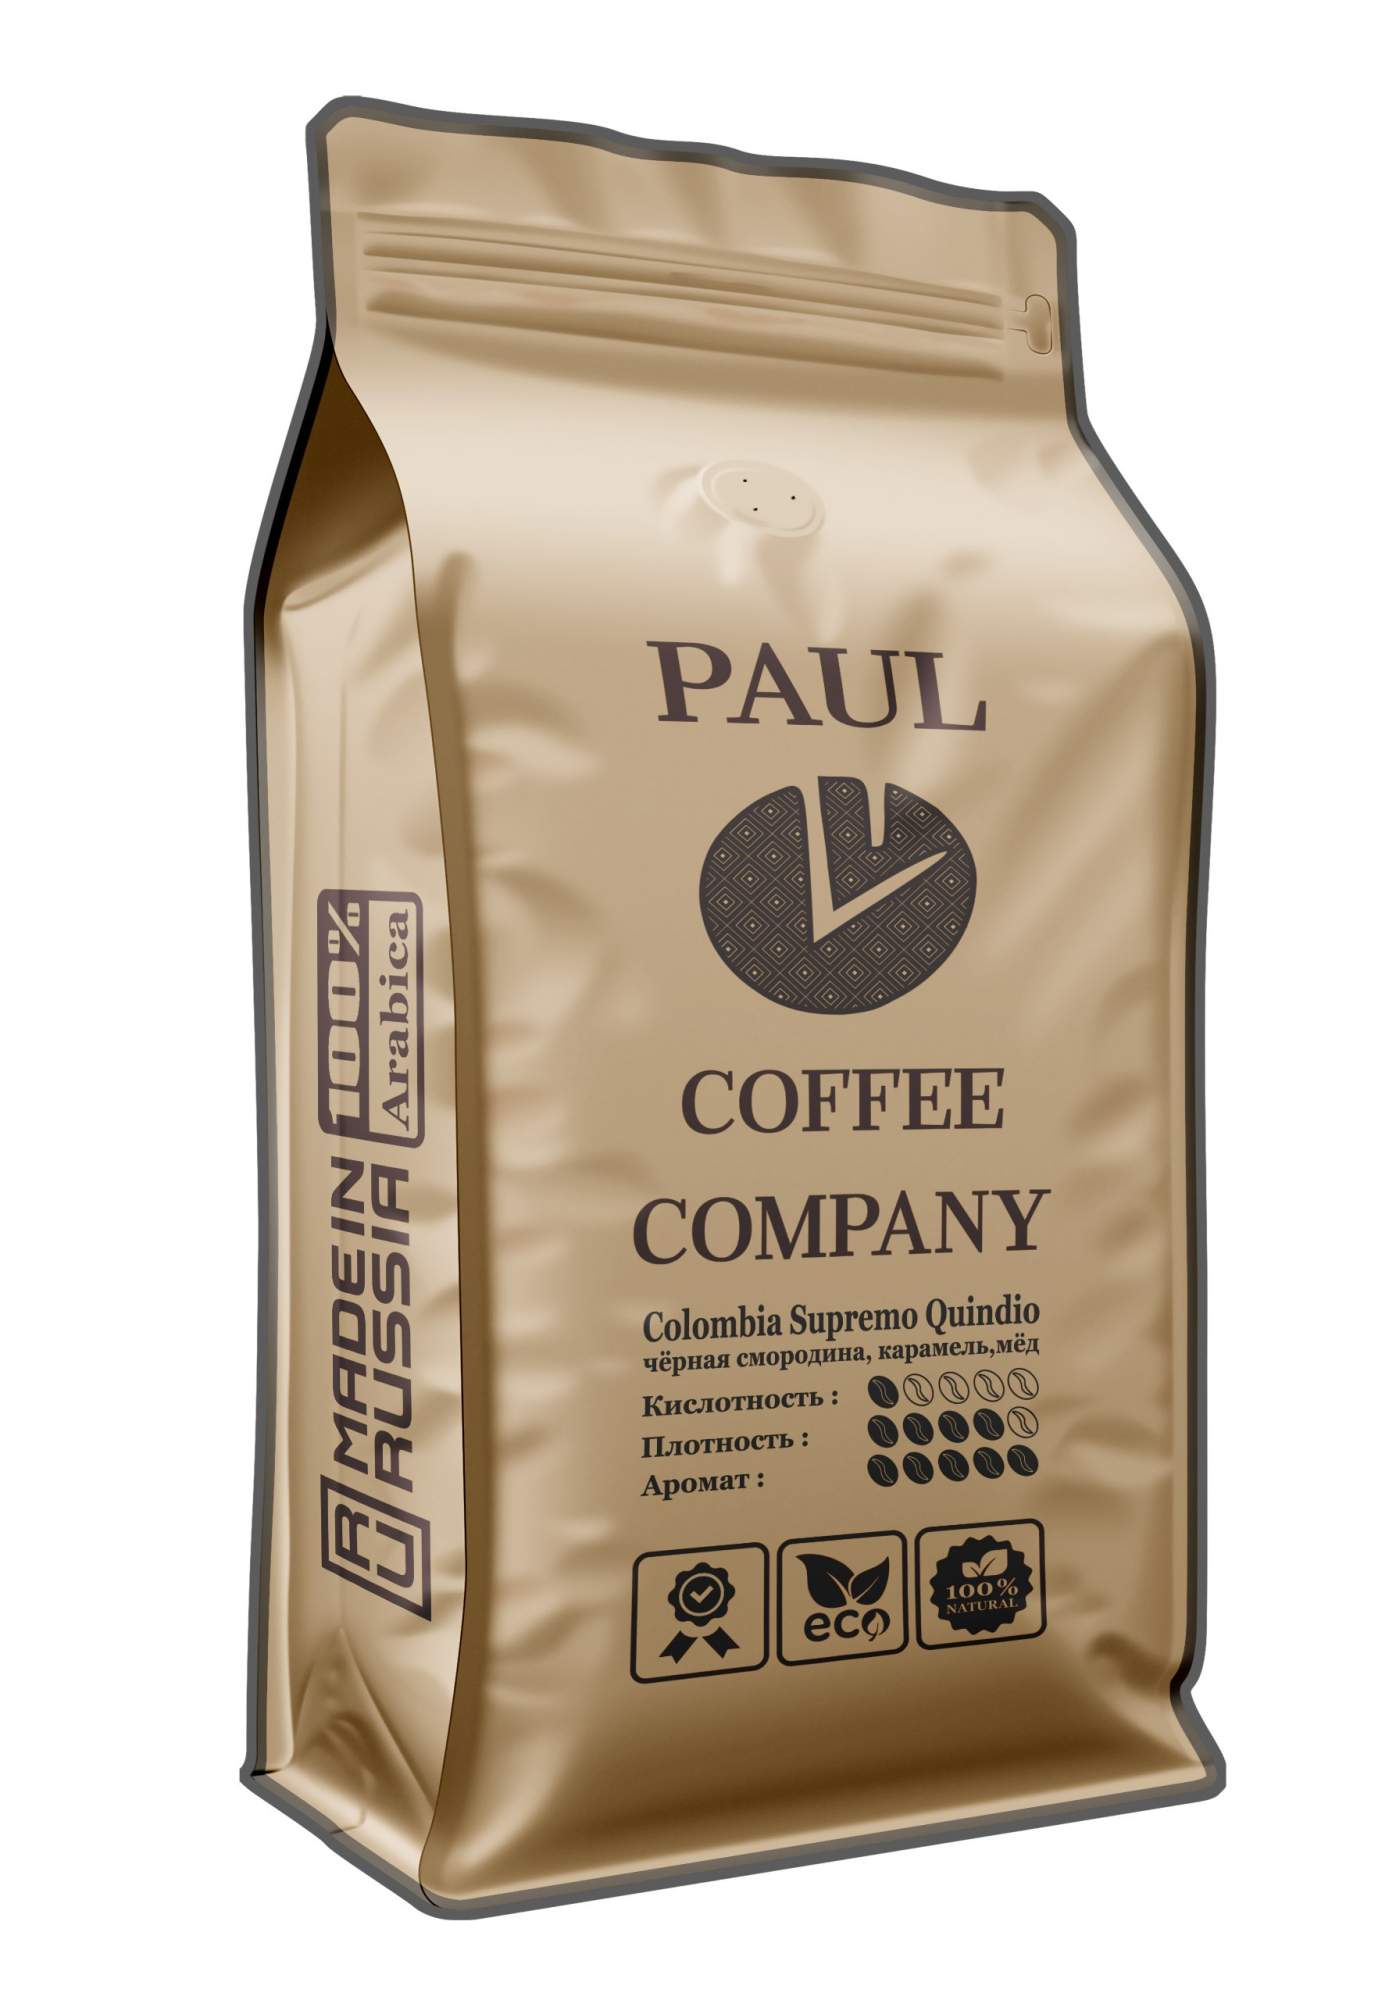 Купить кофе в зернах Paul Coffee Company Колумбия Супремо Киндио Арабика 100%, 250 г, цены на Мегамаркет | Артикул: 600012337077